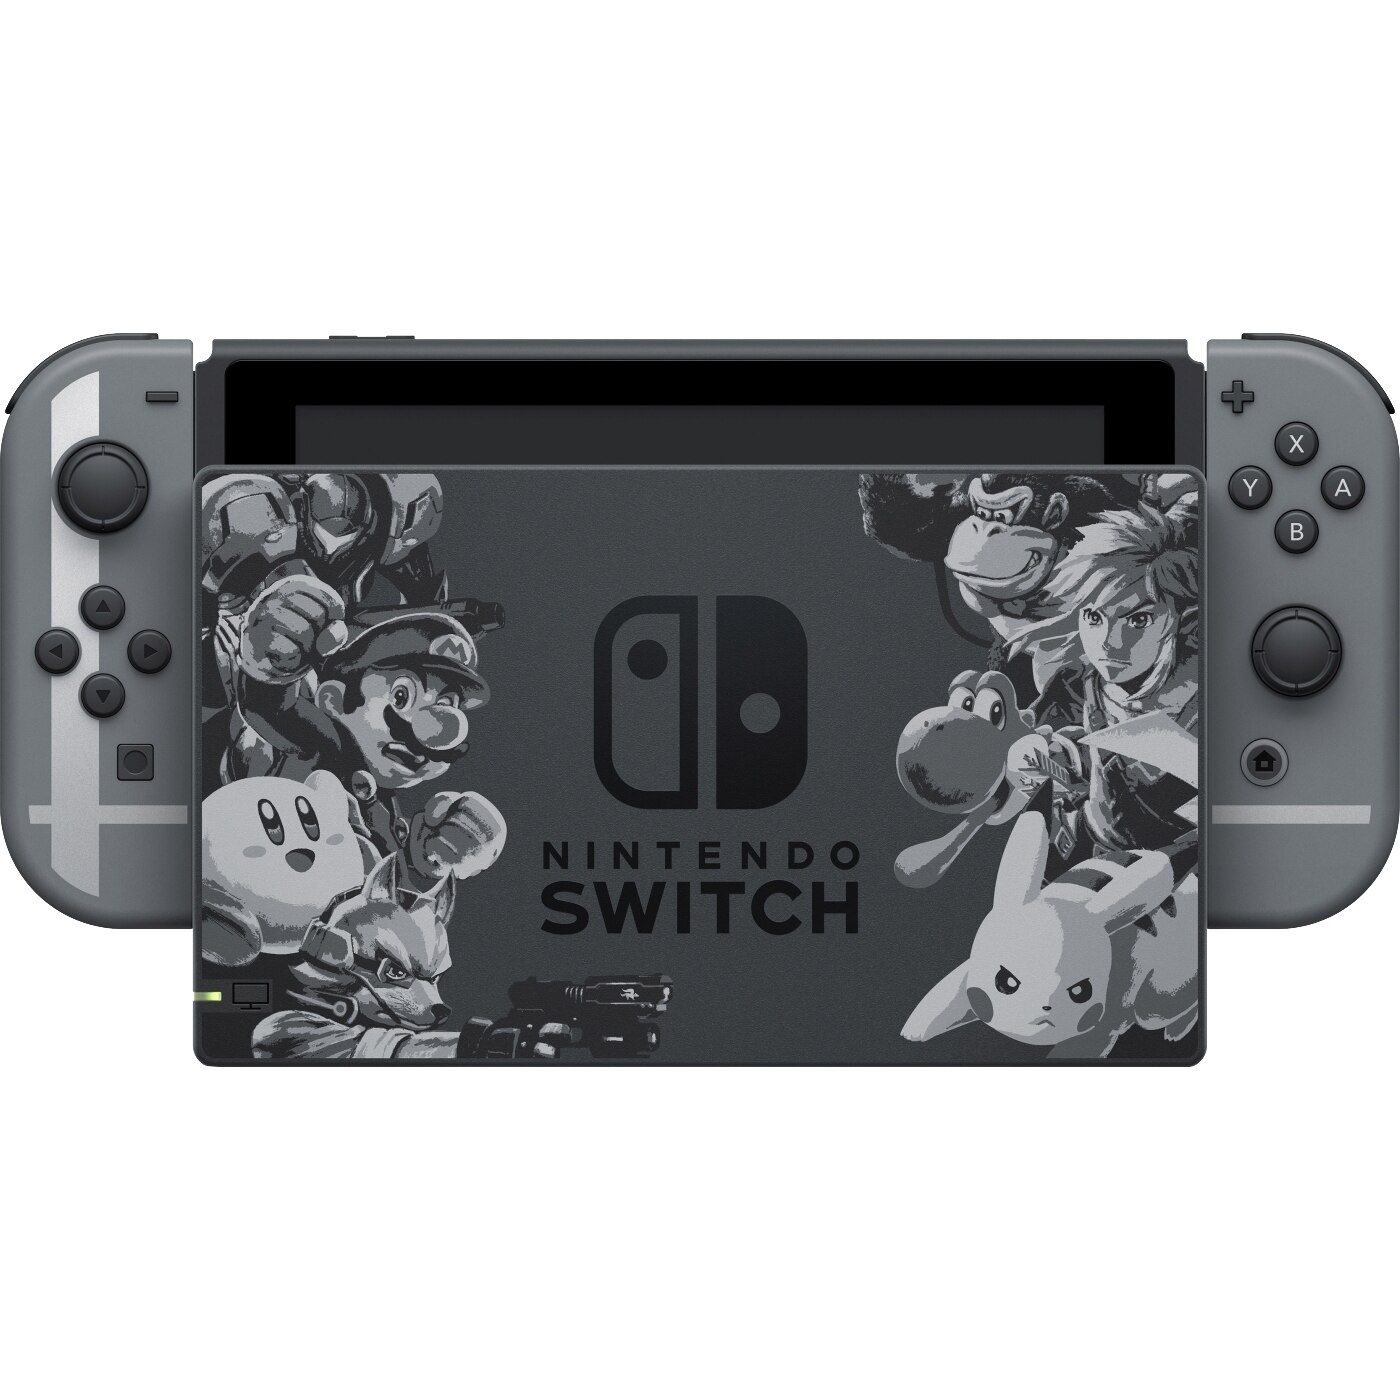 Nintendo switch smash. Игровая консоль Nintendo Switch. Нинтендо свитч супер смэш БРОС. Nintendo Switch super Smash Bros Ultimate Edition. Nintendo Switch Limited Edition.